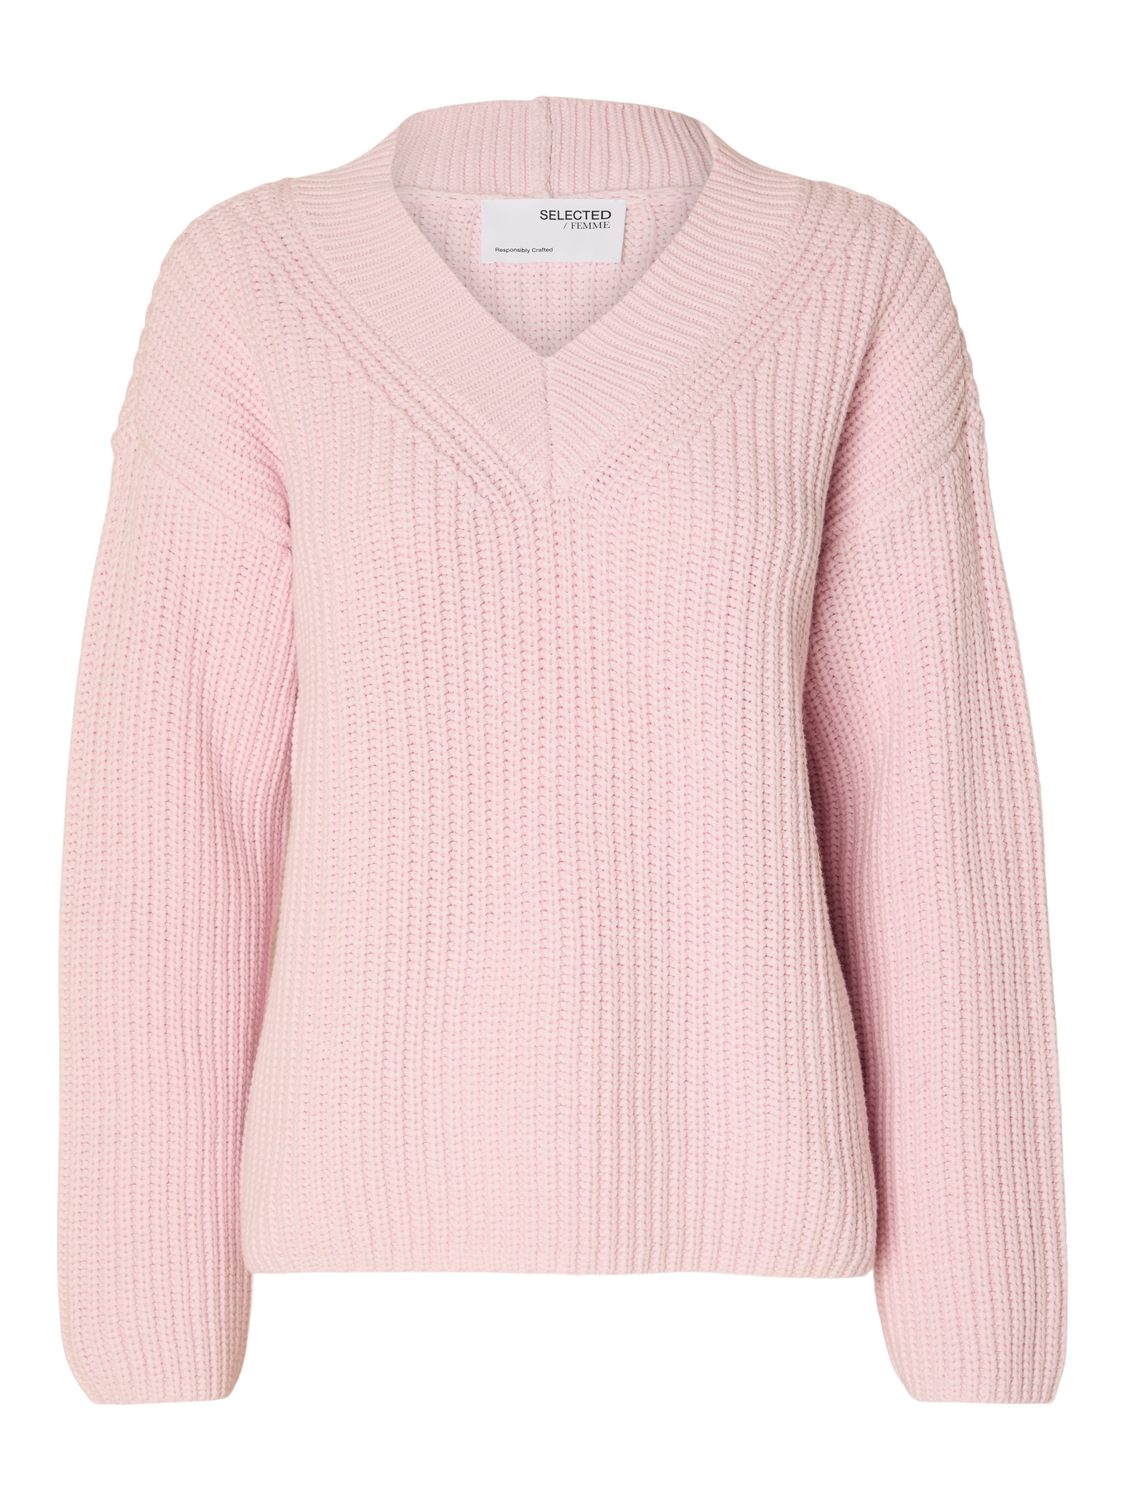 SLFSELMA Pullover - Cradle Pink